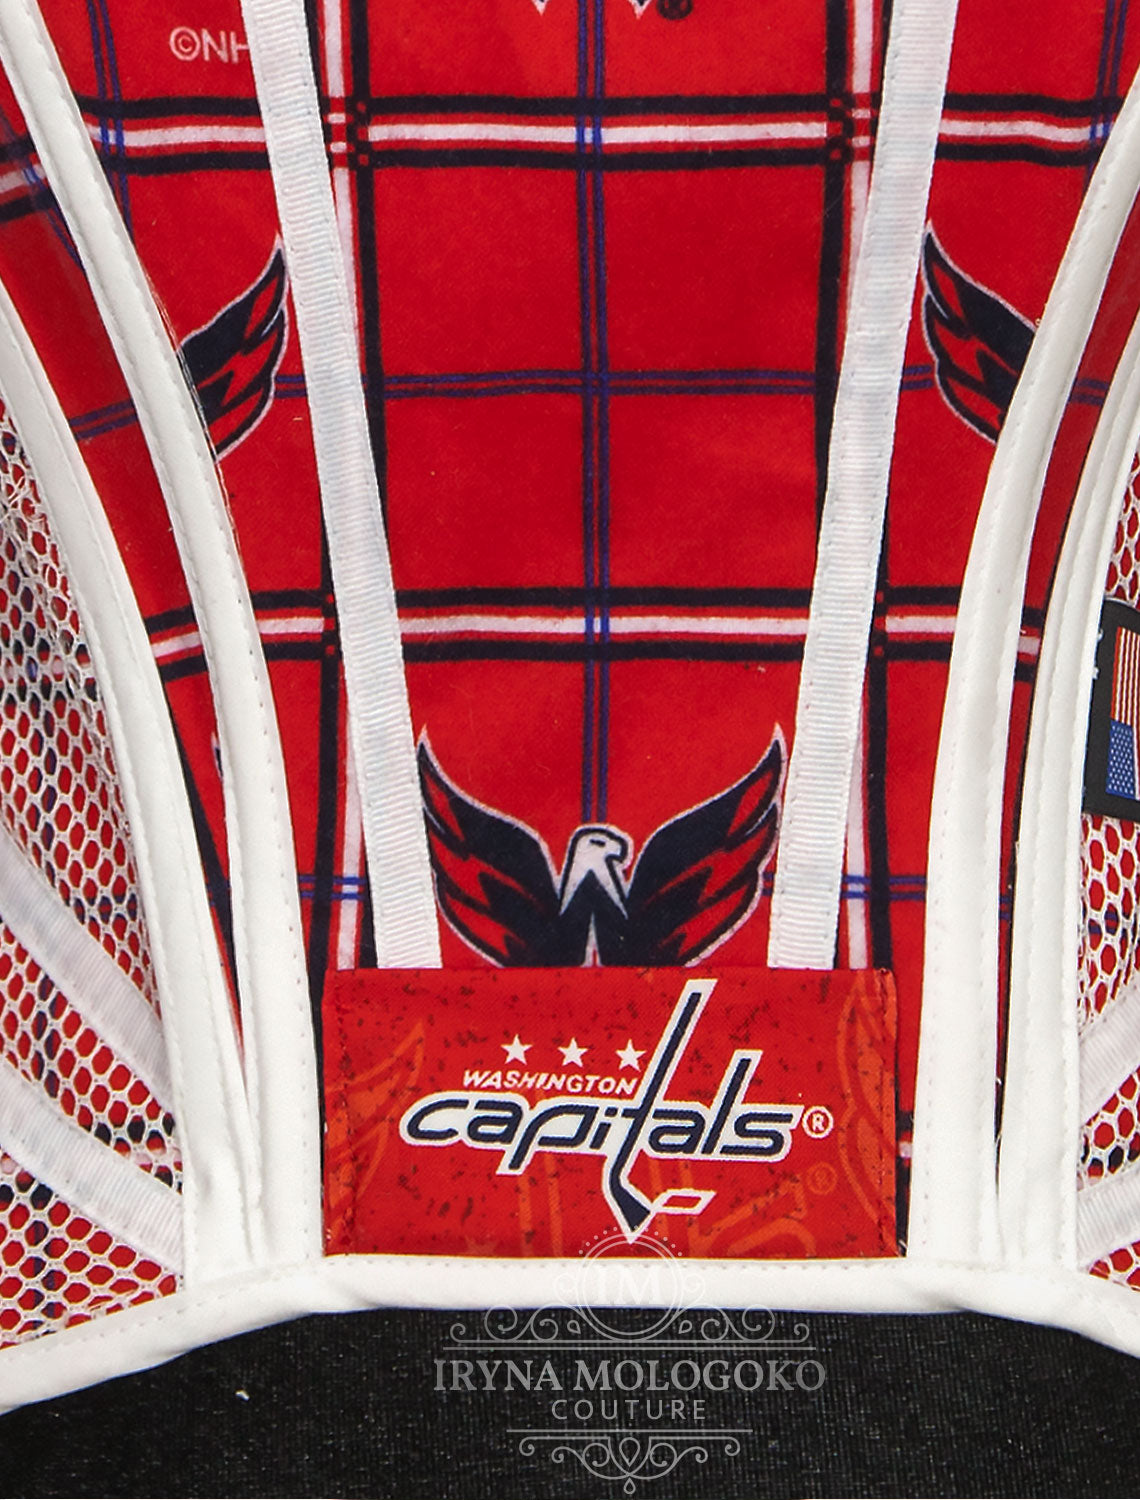 NHL Washington Capitals Hockey Team Corset Bustier Top